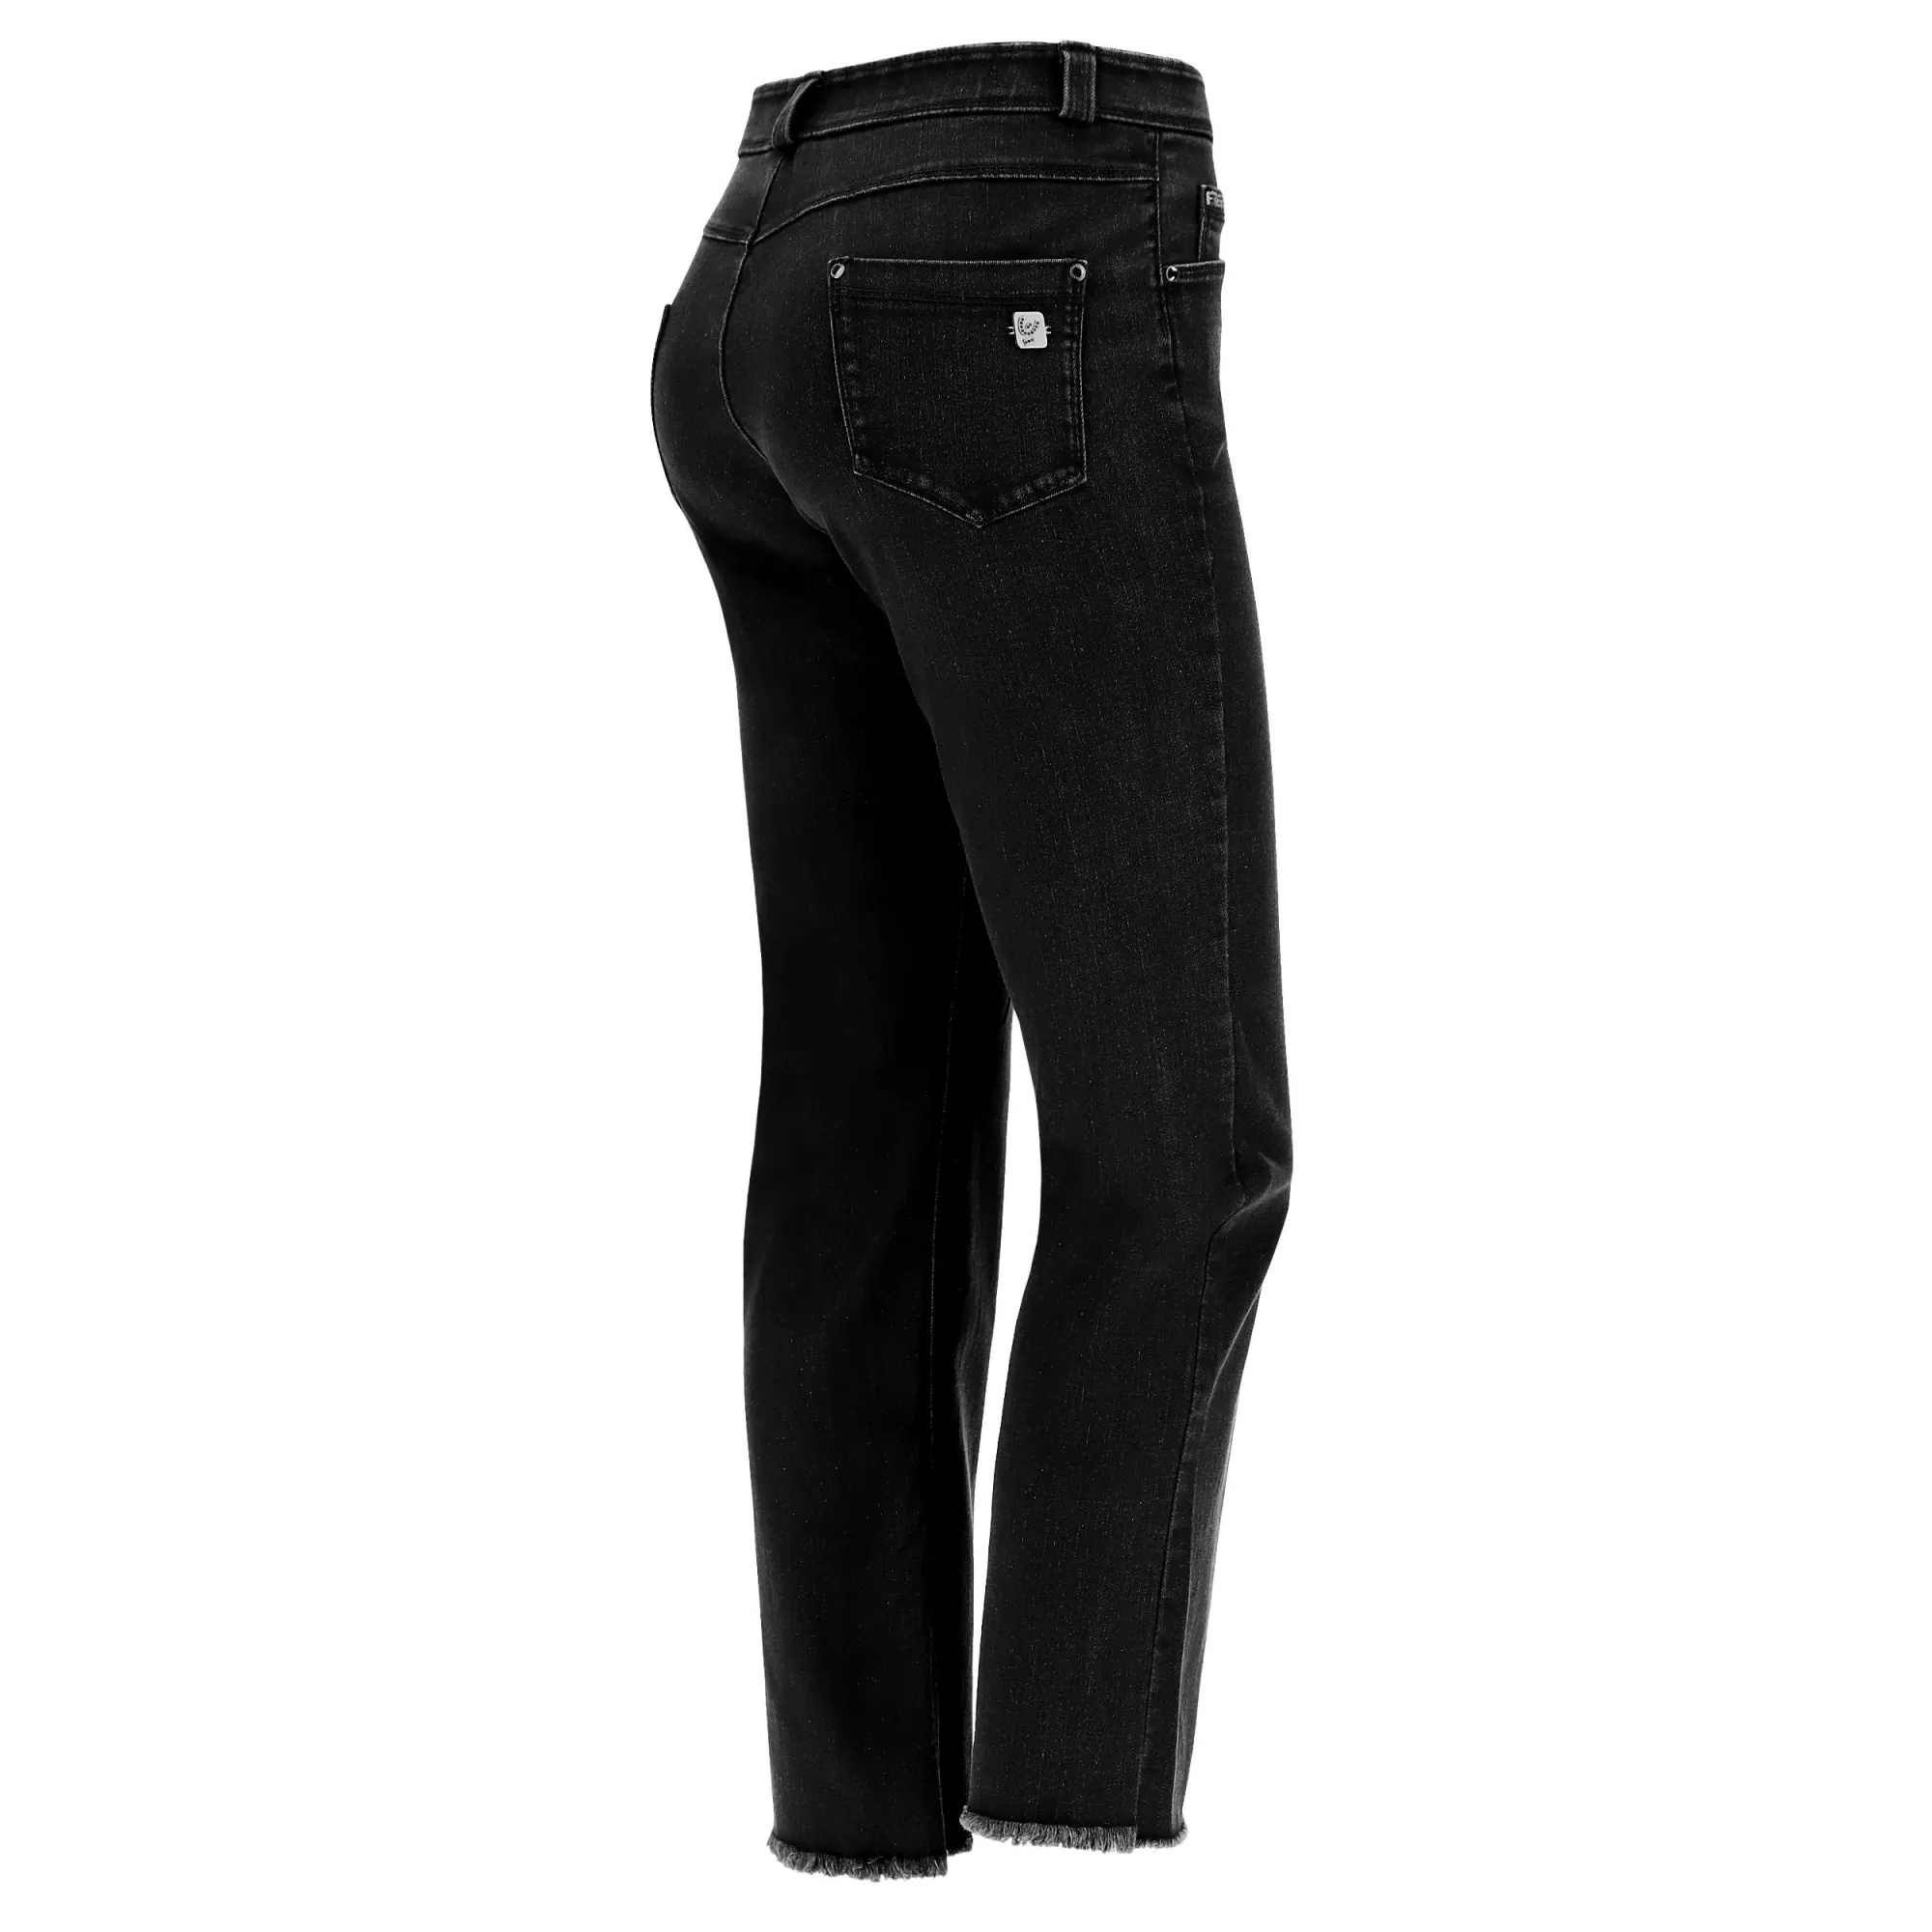 Freddy Fit Jeans - Regular Waist Straight - Cropped - Black Denim – Black Seam - J7N